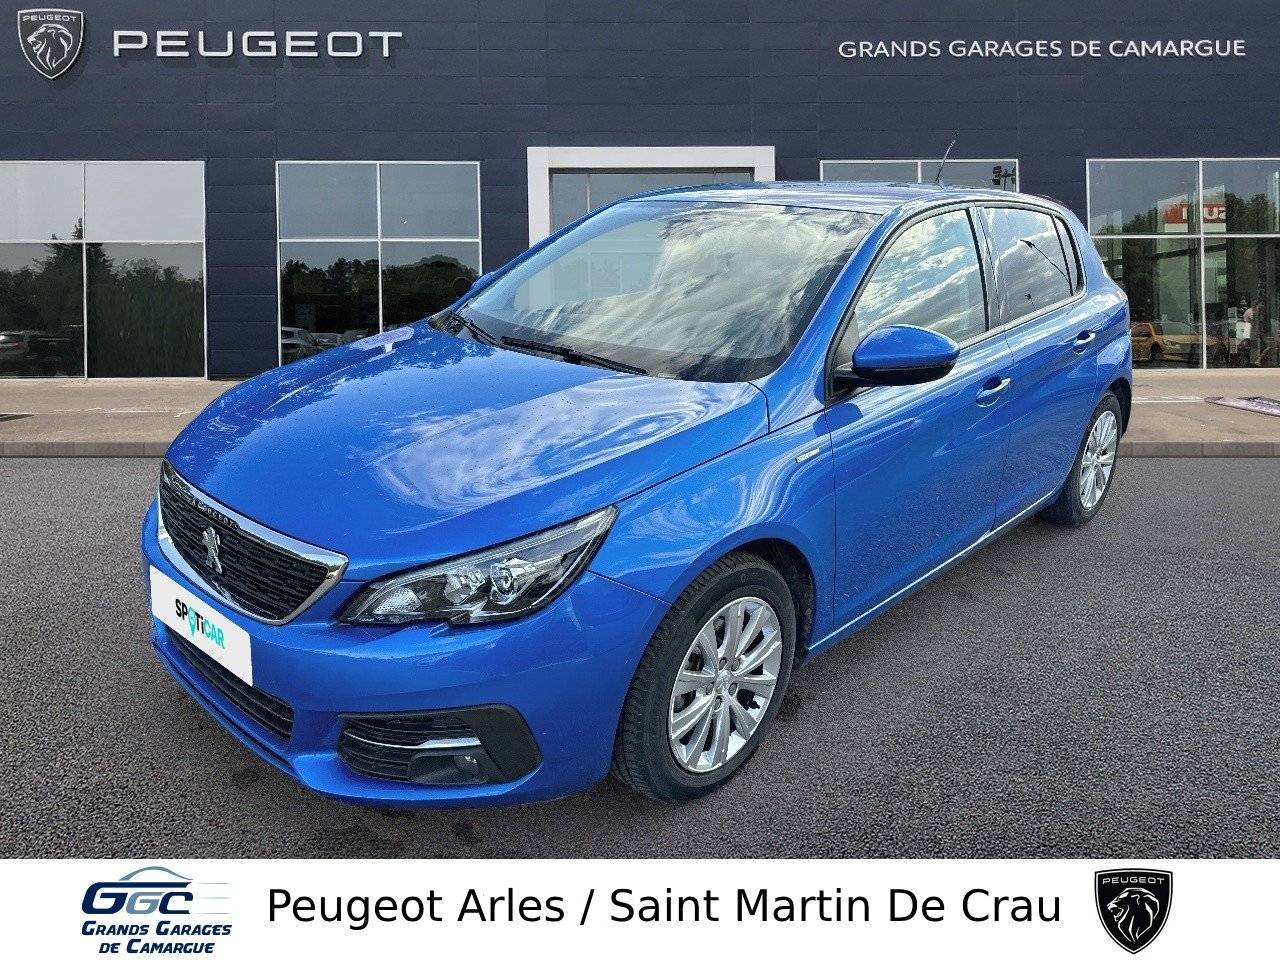 PEUGEOT 308 | 308 BlueHDi 130ch S&S EAT8 occasion - Suzuki Arles